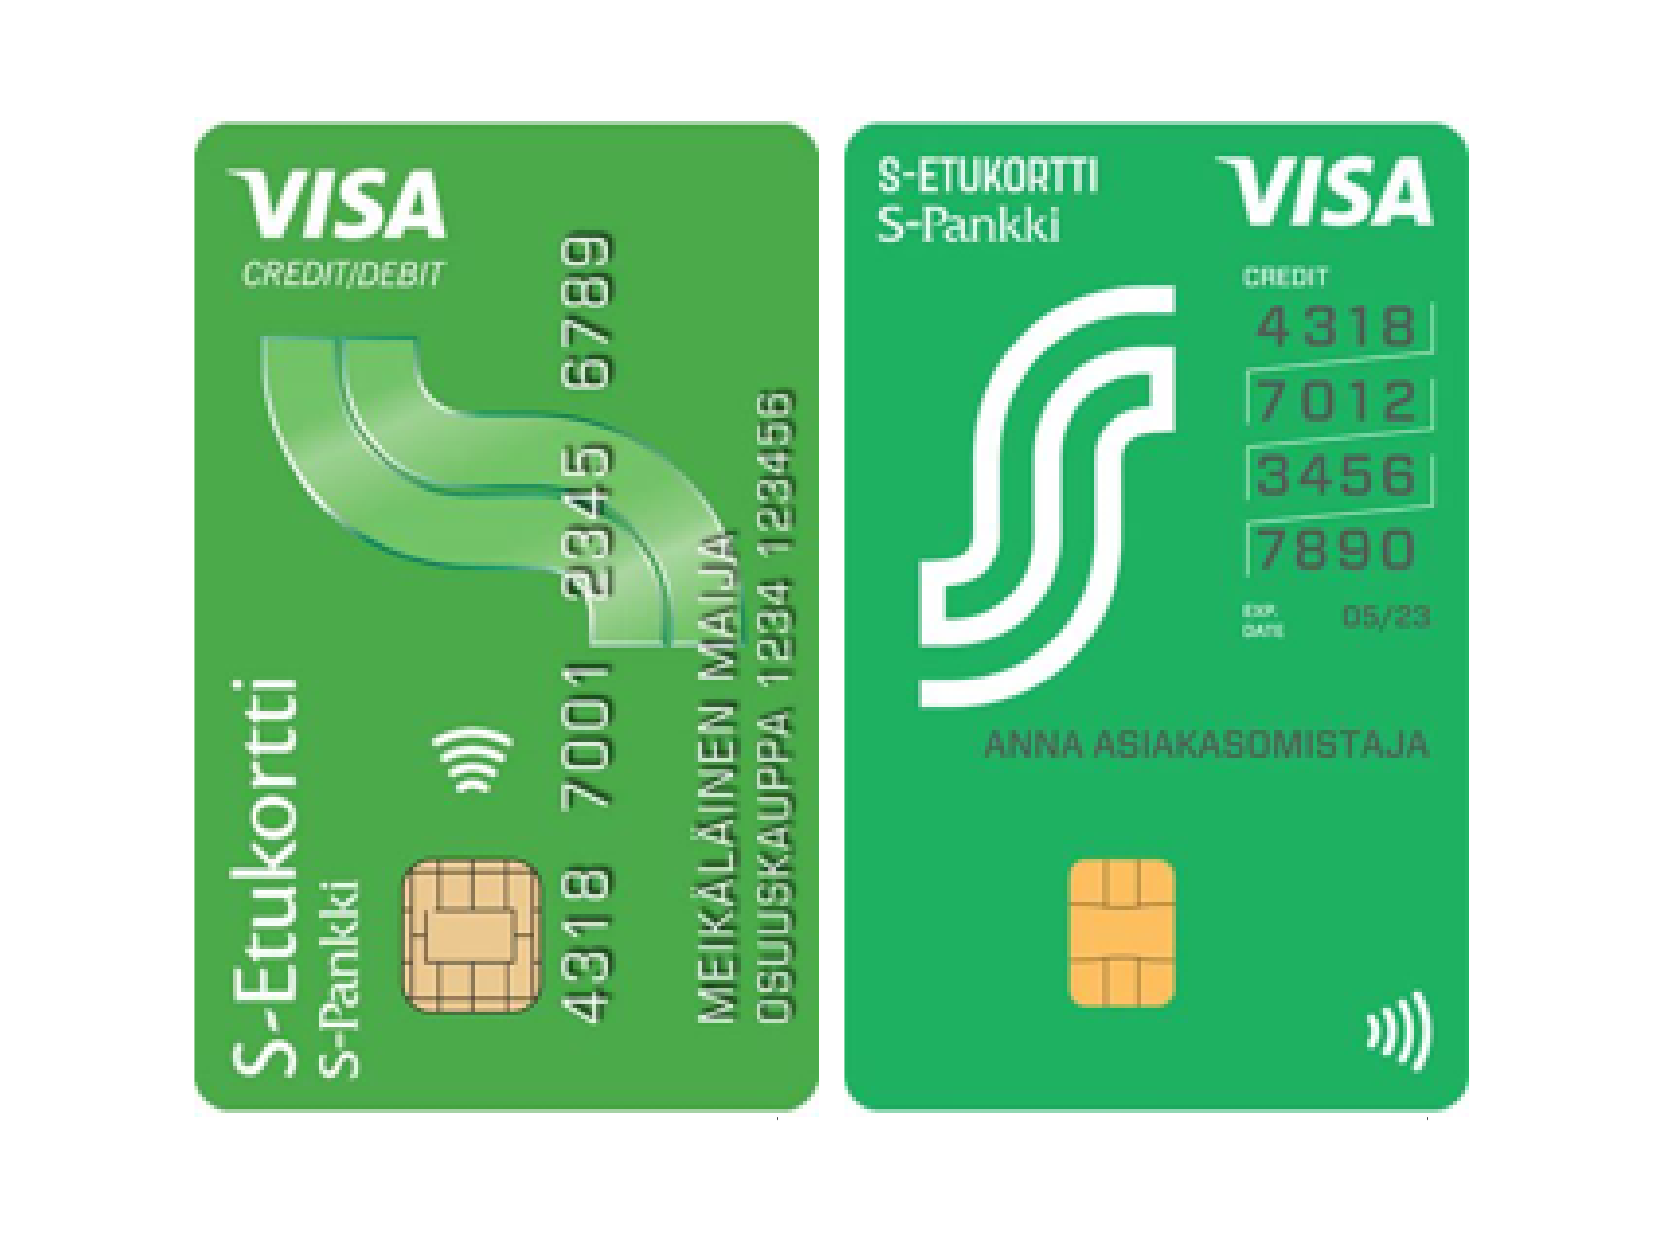 S-Etukortti Visa Credit/Debit